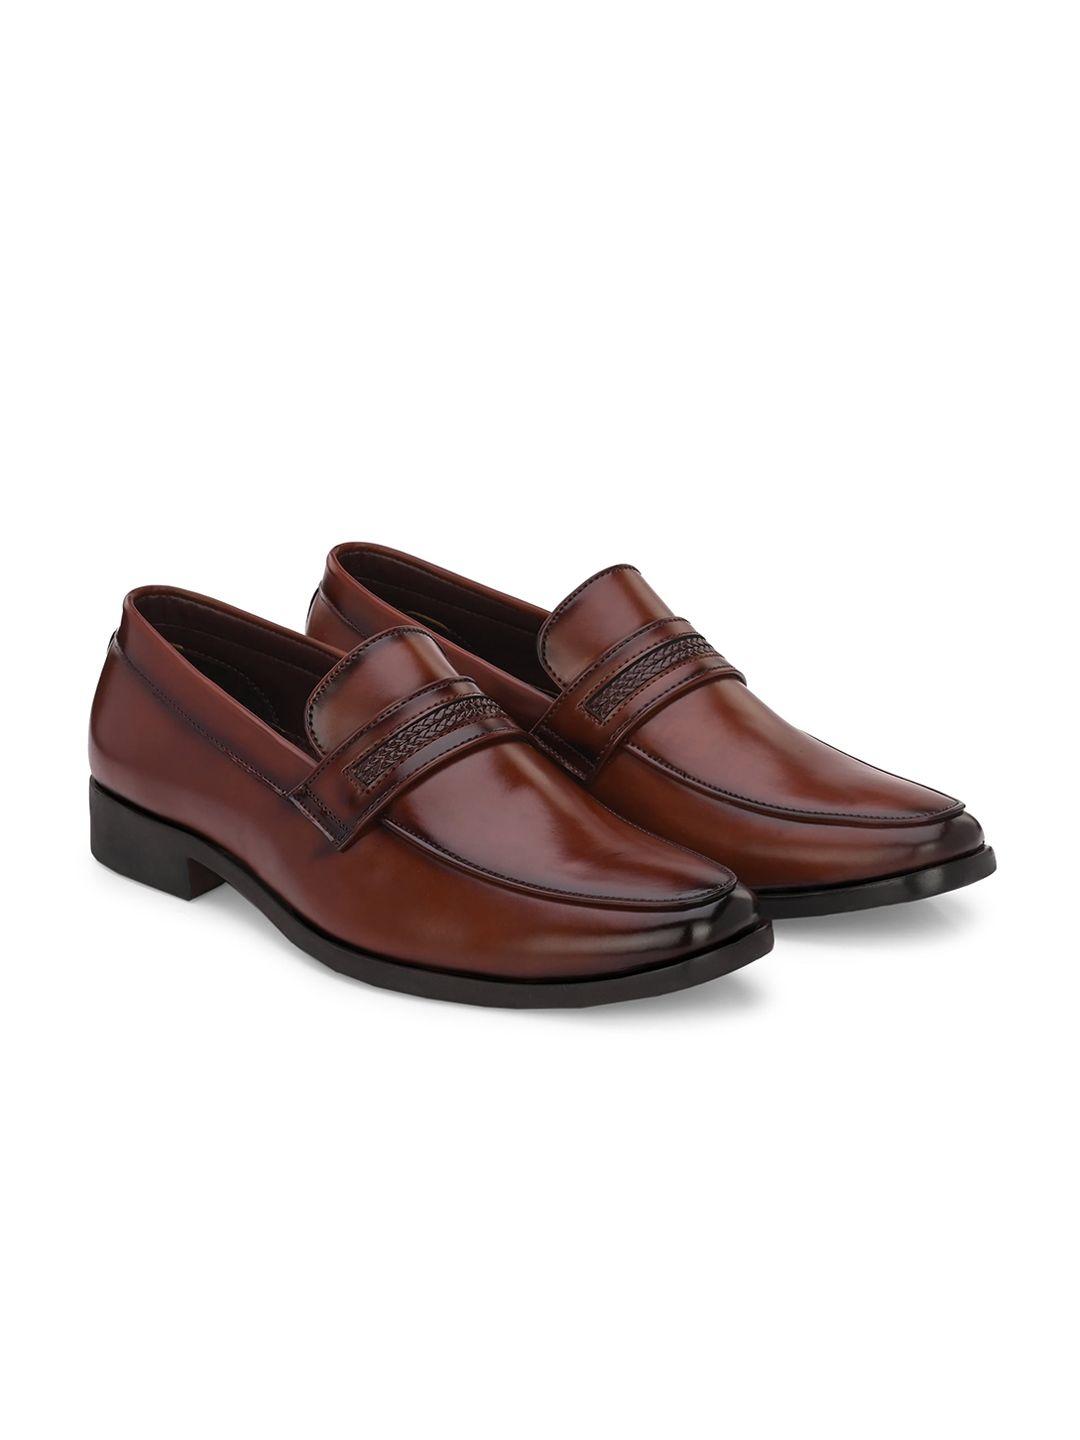 azzaro-black-men-slip-on-formal-loafers